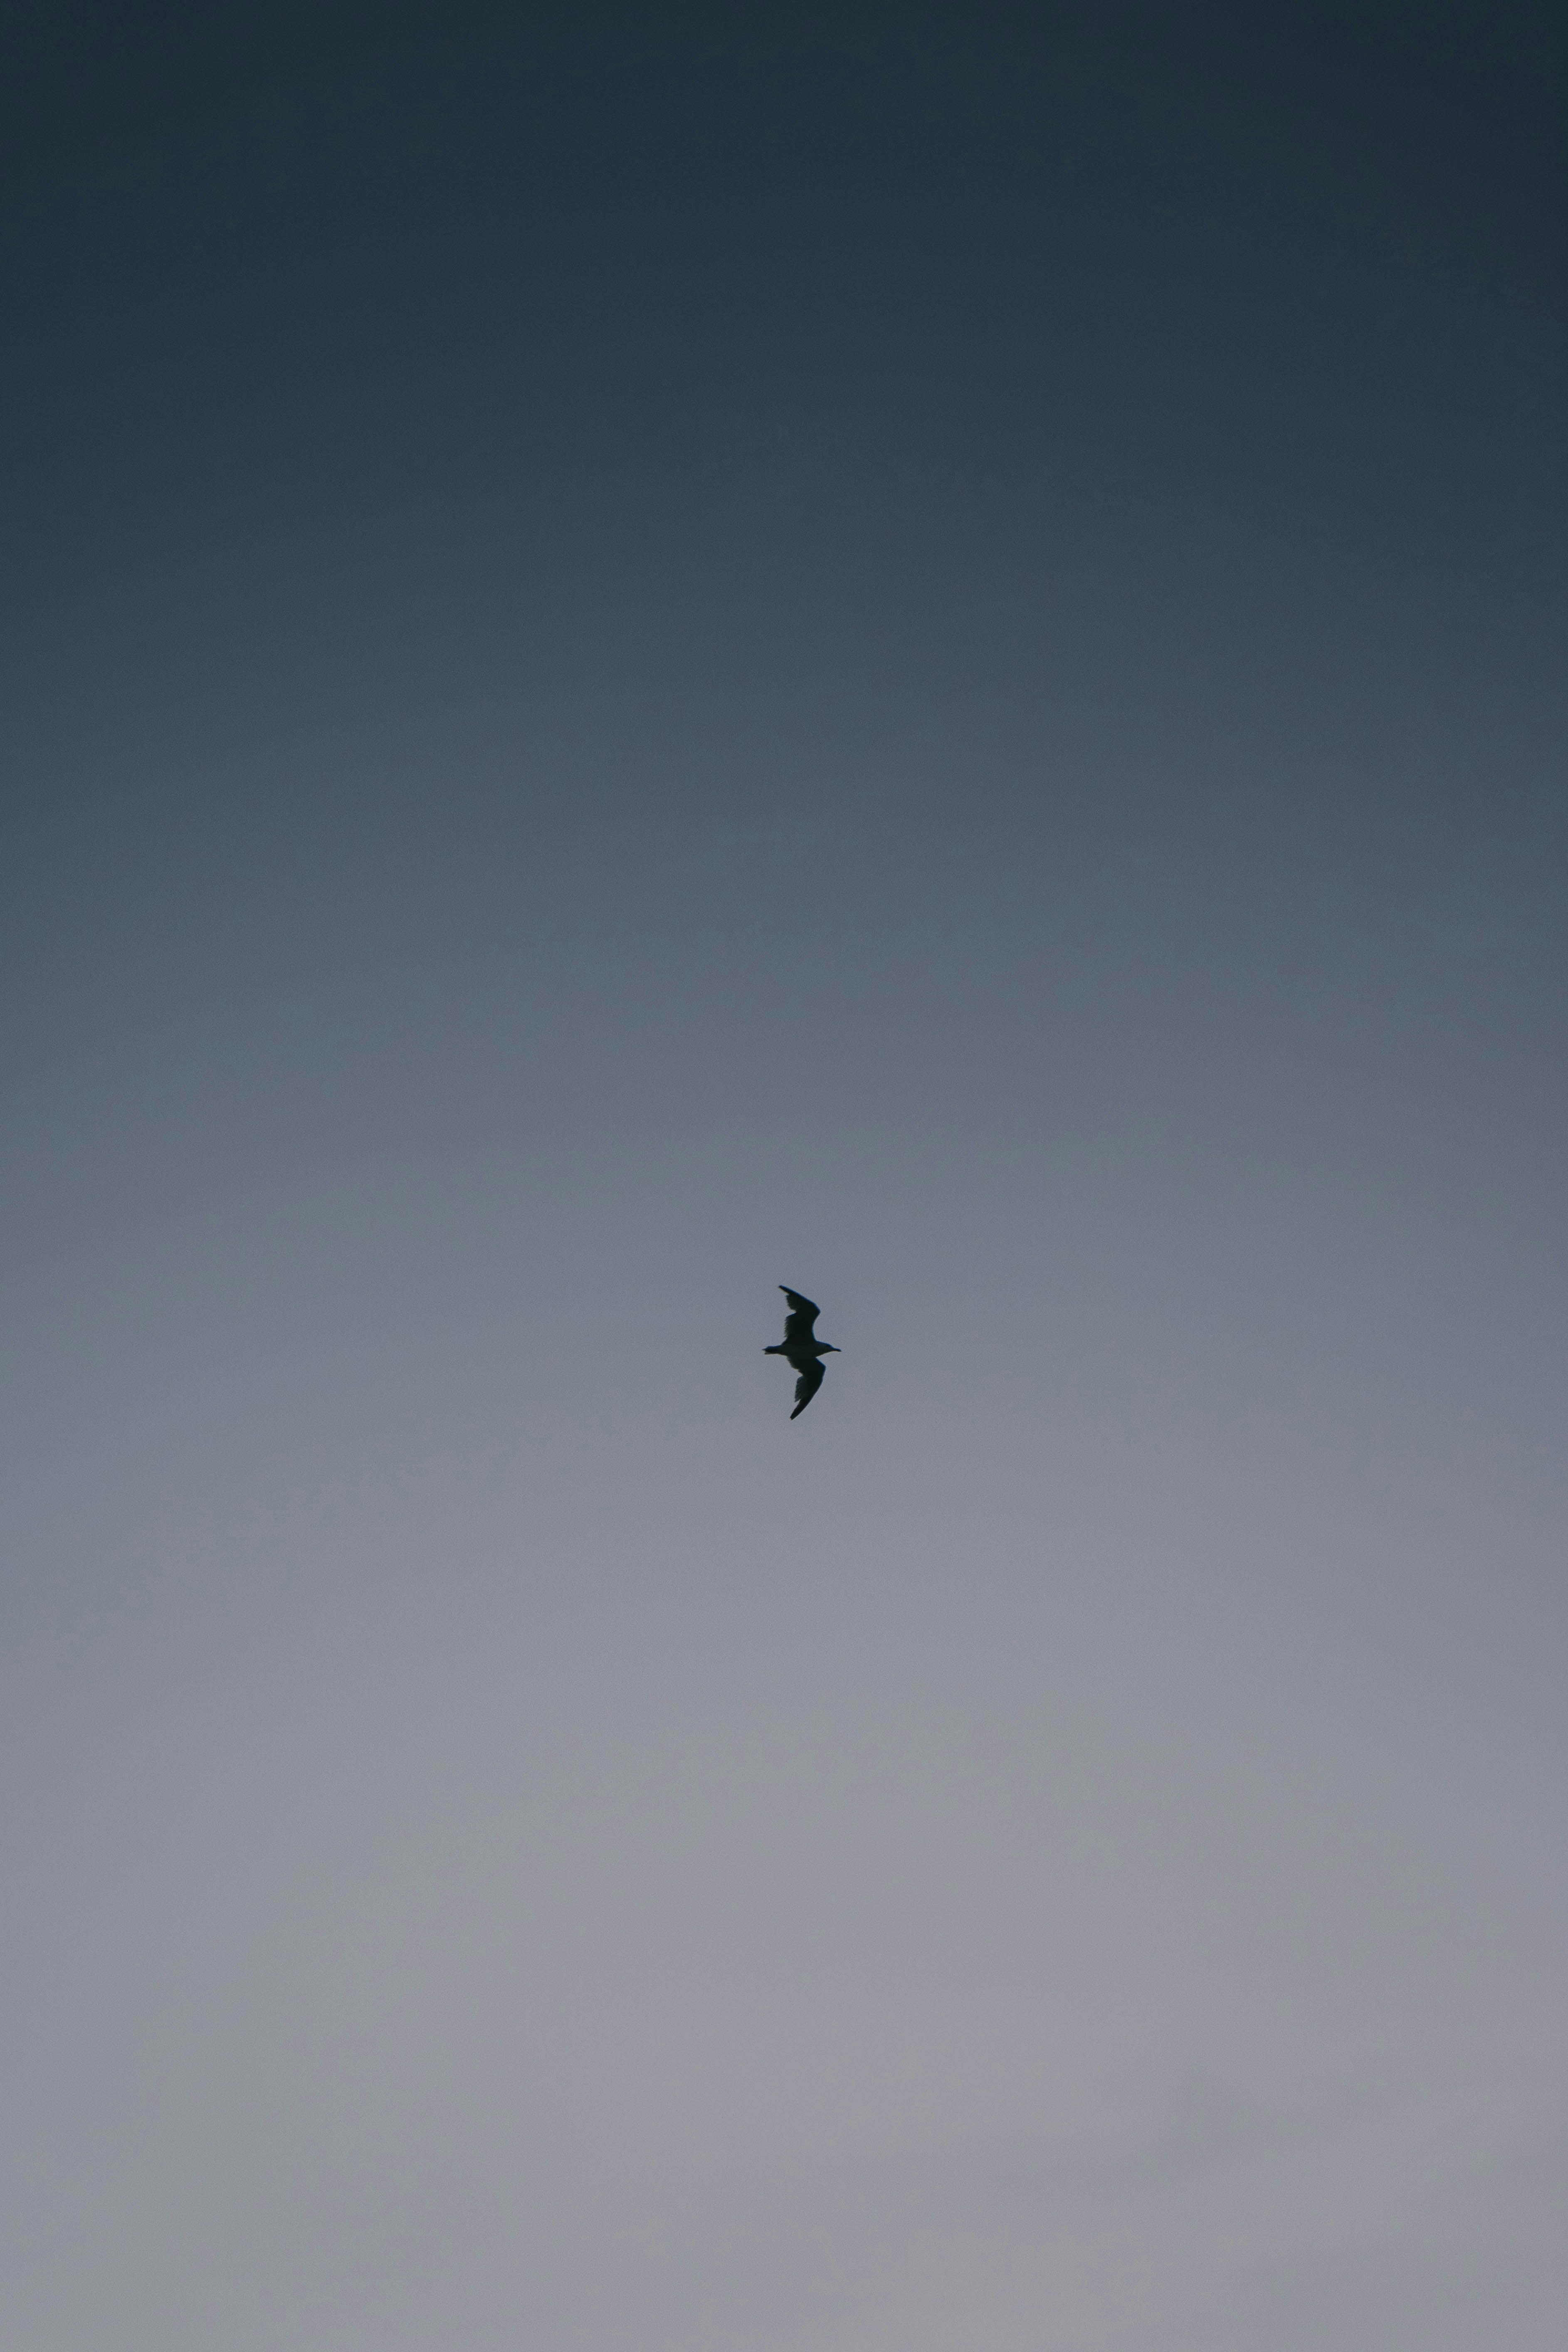 silhouette of bird flying under gray sky